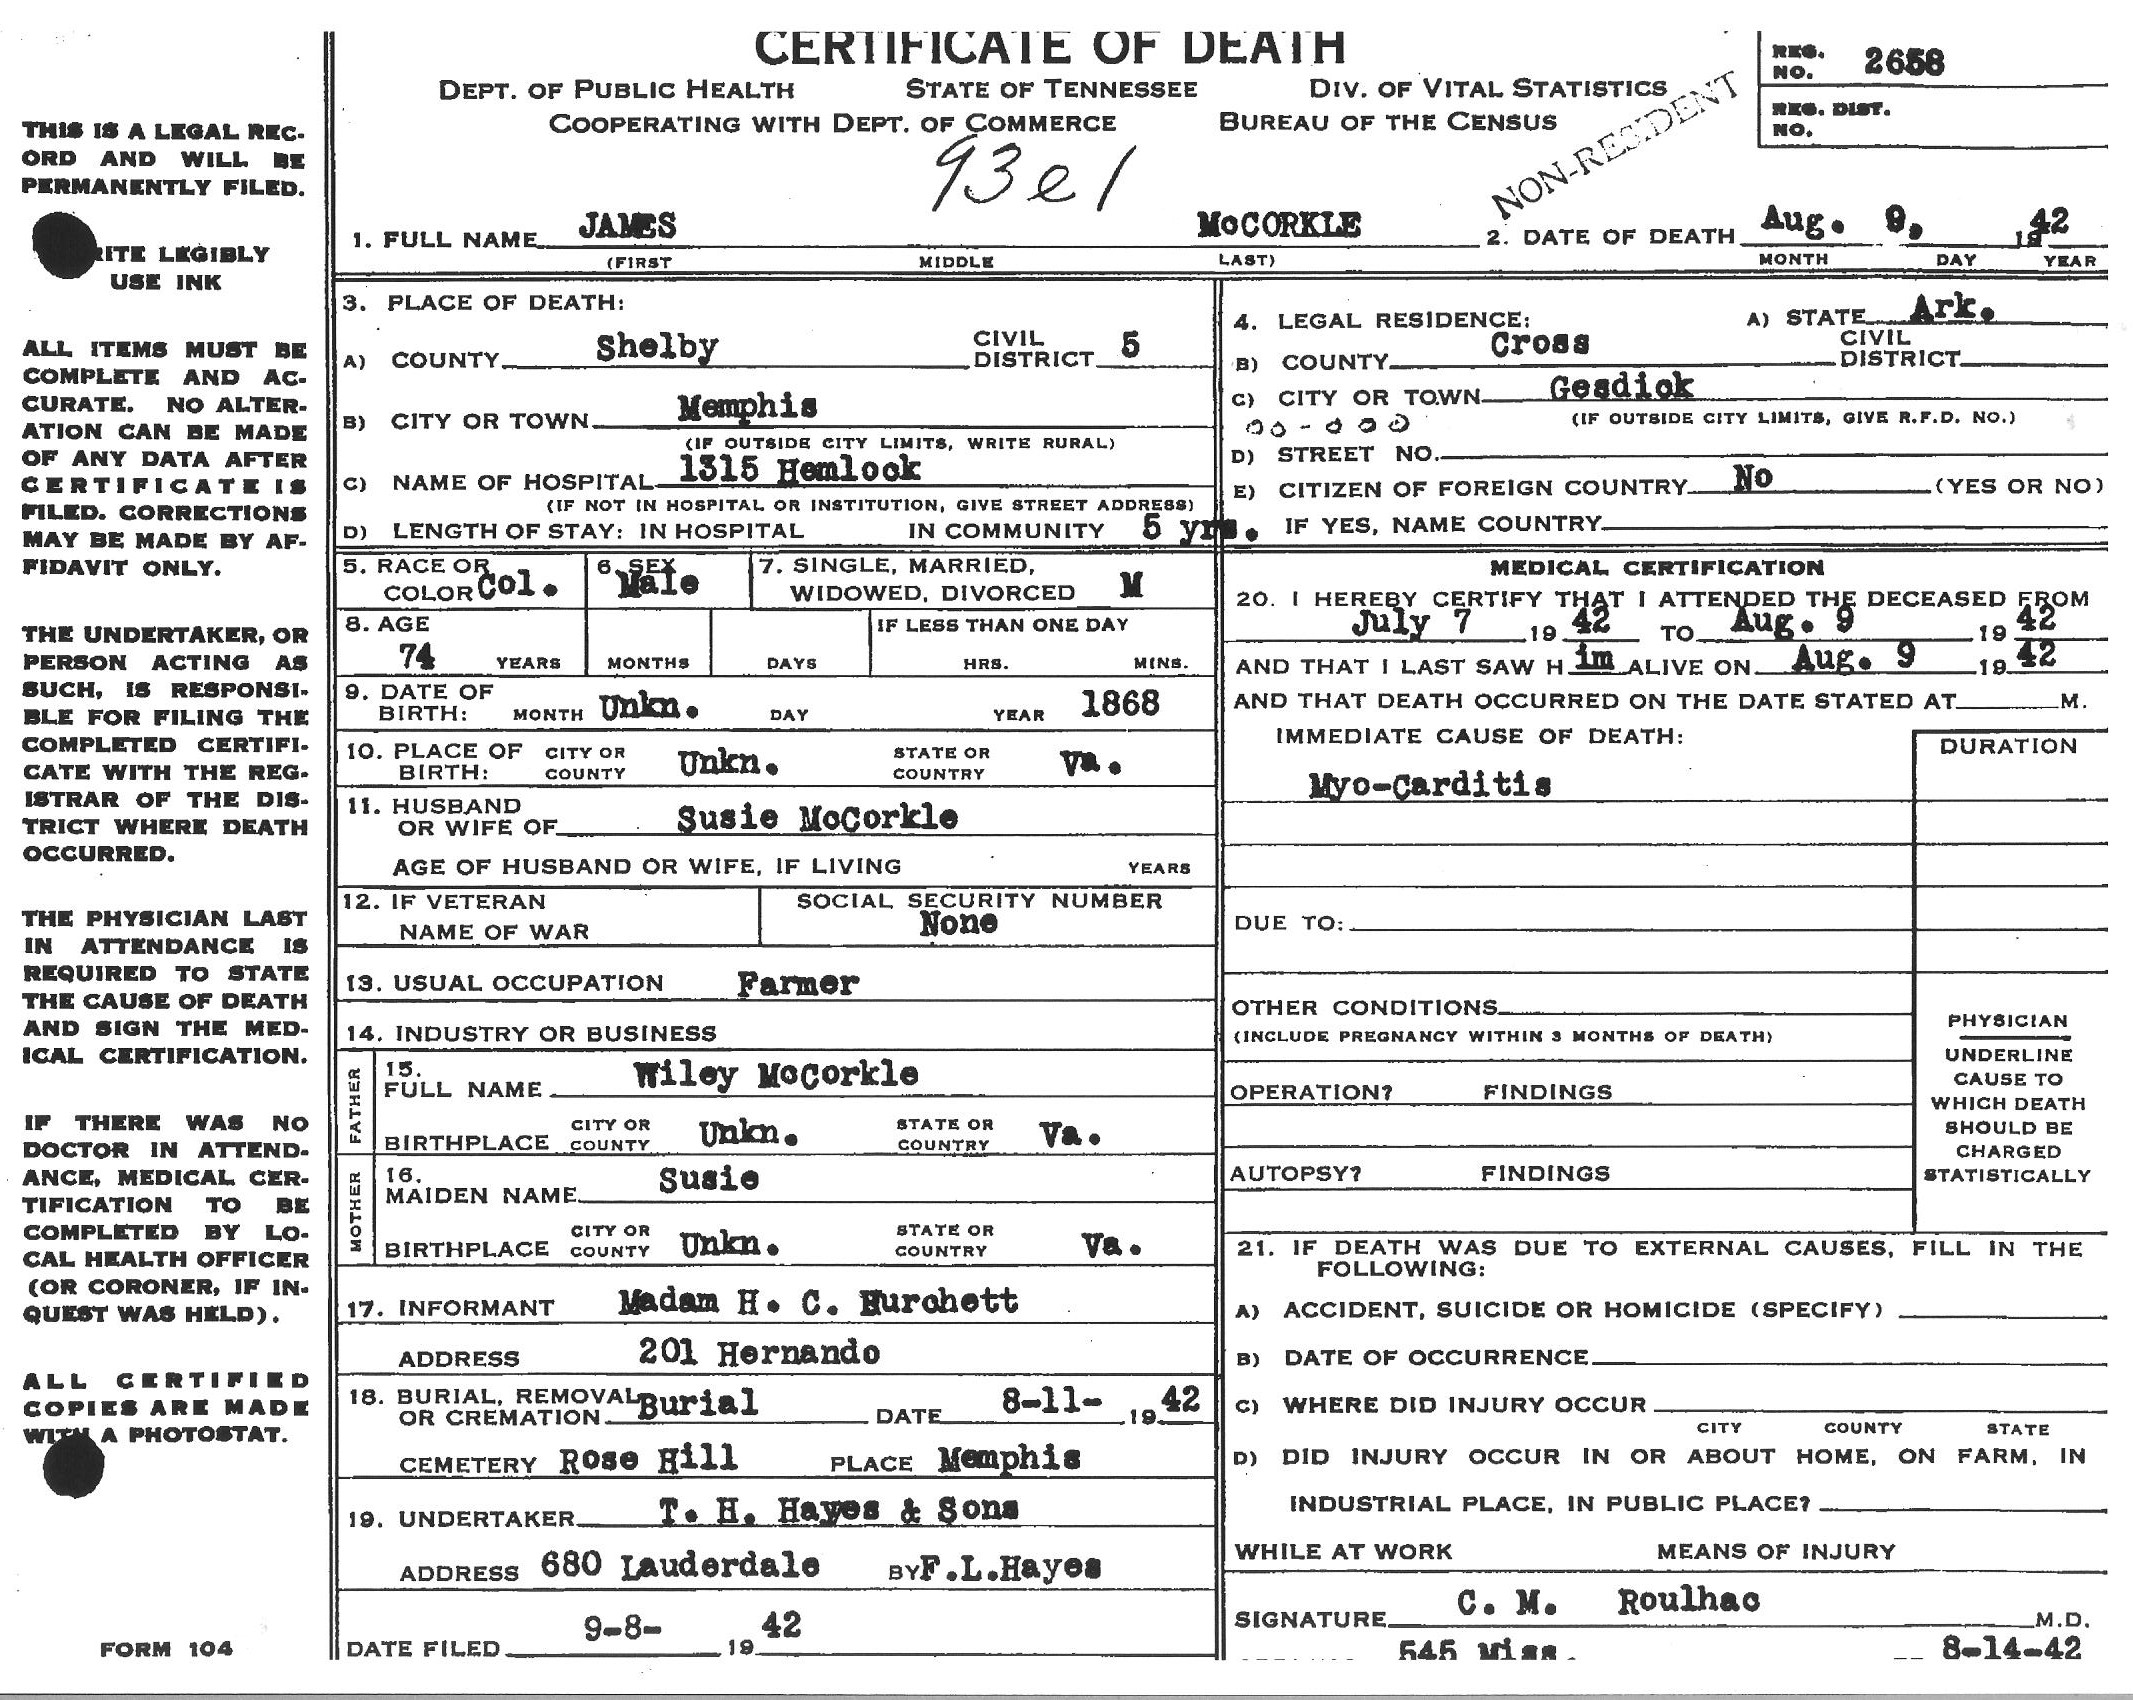 James P. McCorkle's Death Certificate